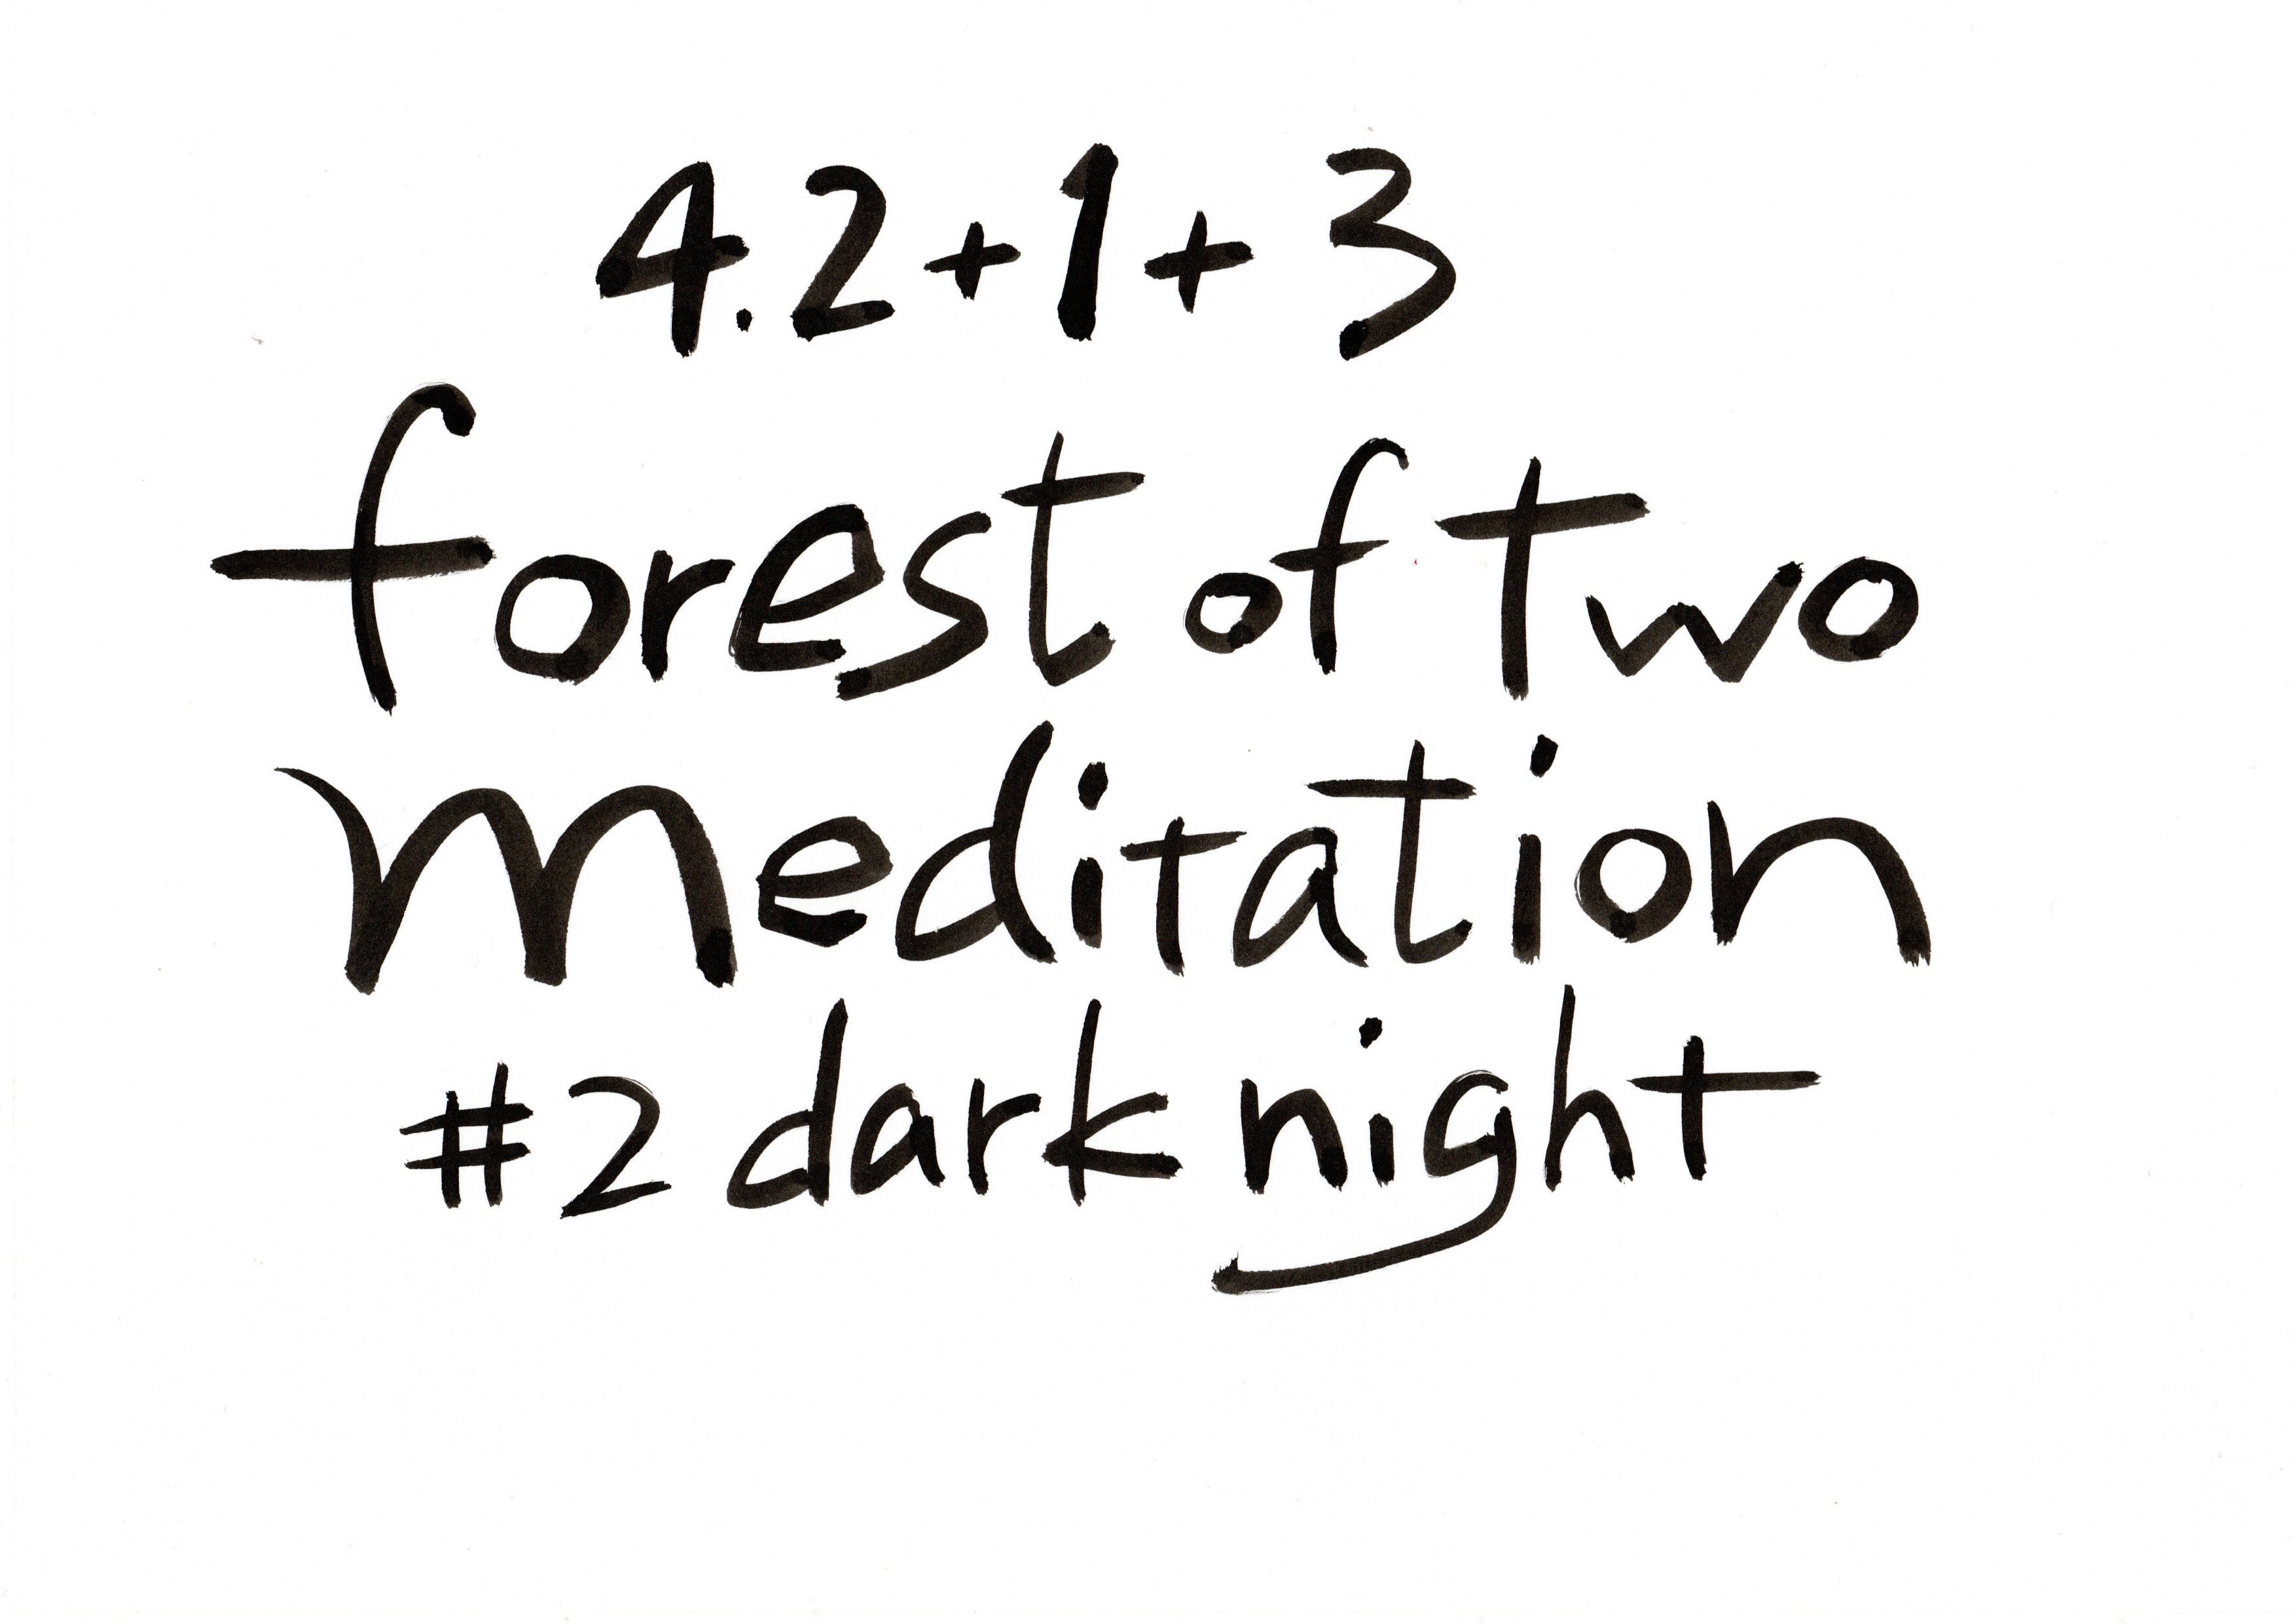 4.2+1+3 forest of two meditation #2 Dark night